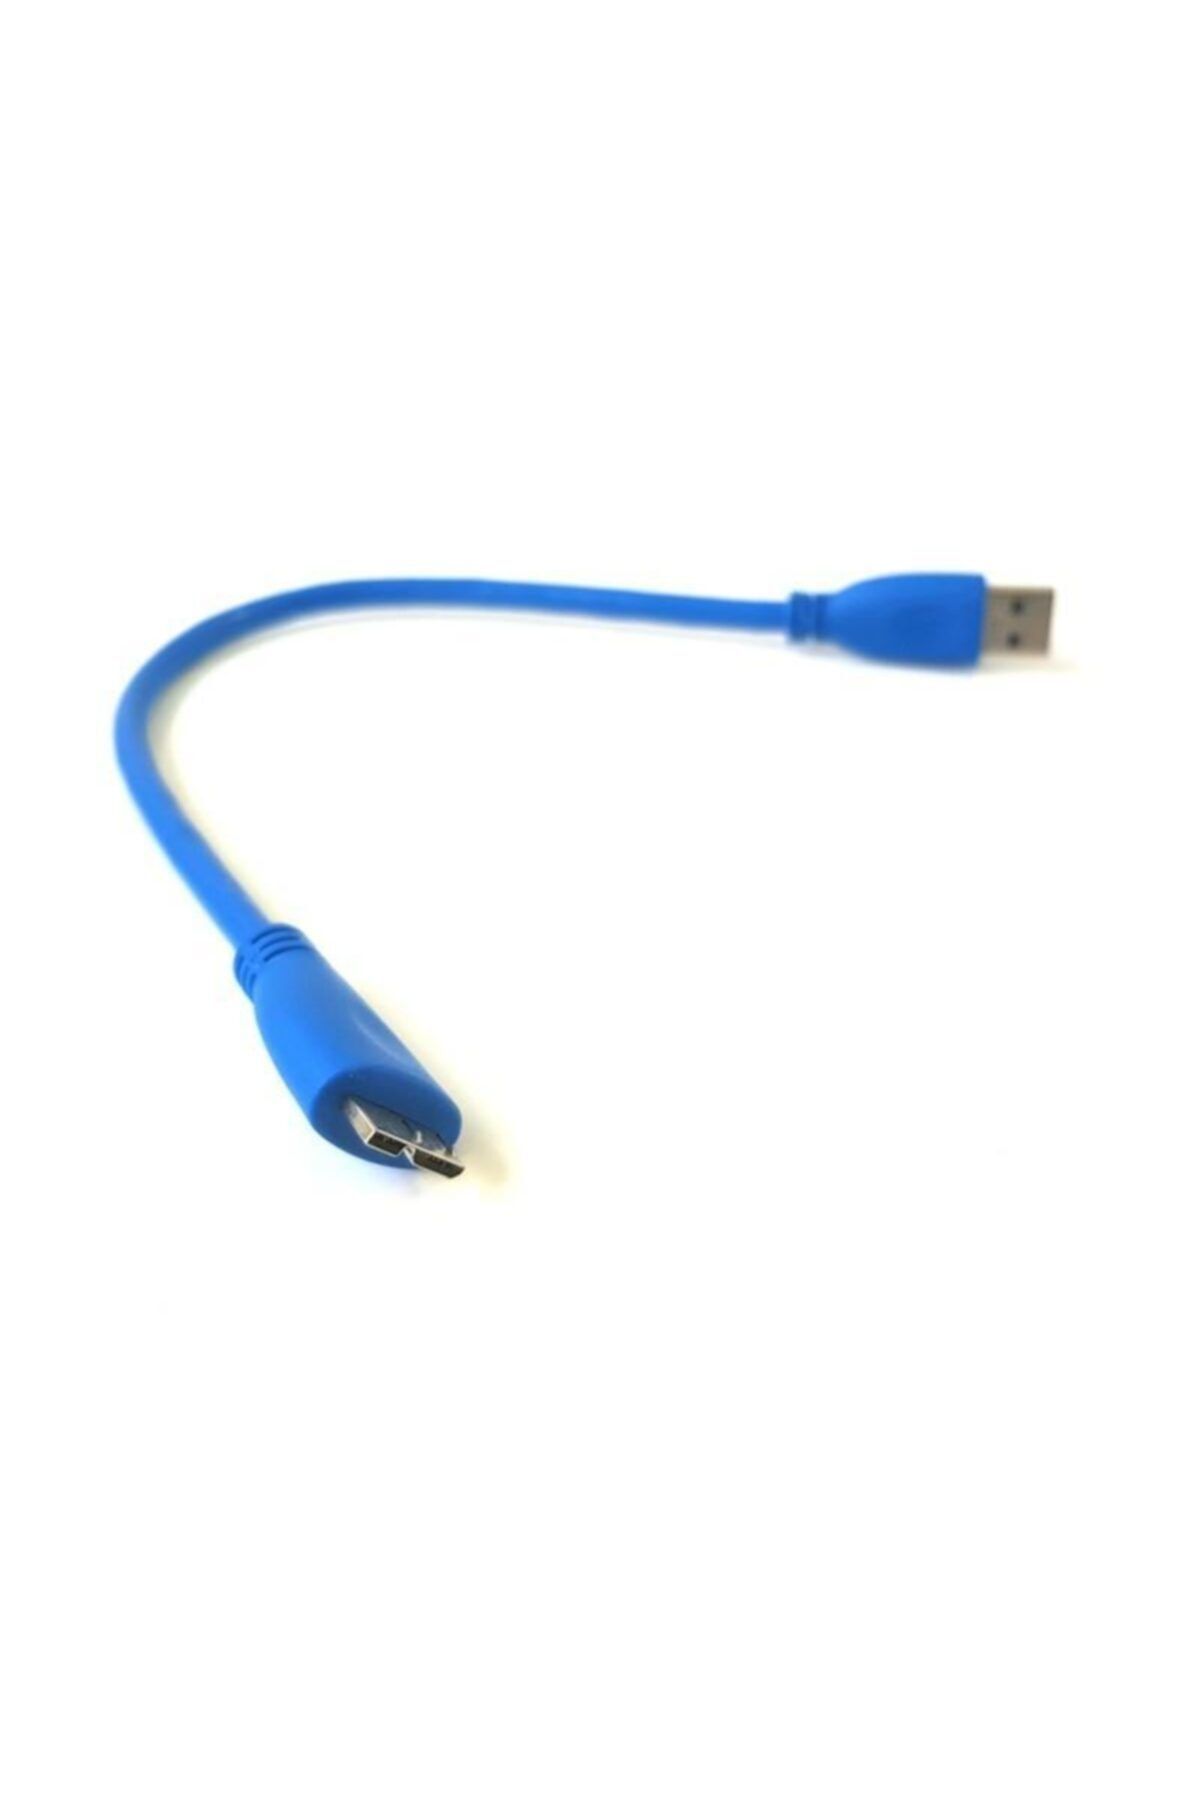 electroon USB 3.0 Taşınabilir Harddisk HDD Kablo 30cm